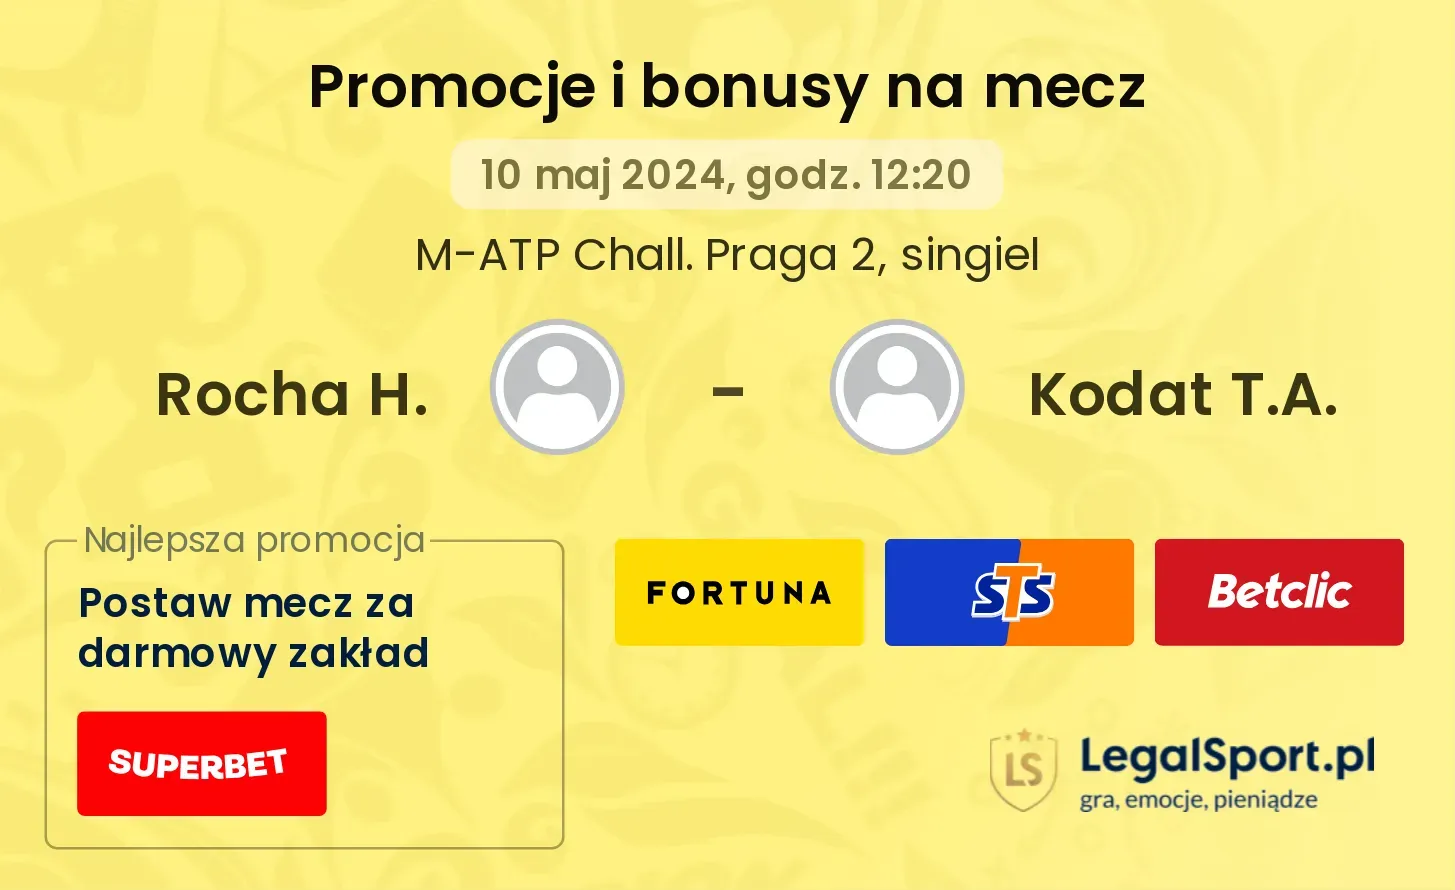 Rocha H. - Kodat T.A. promocje bonusy na mecz